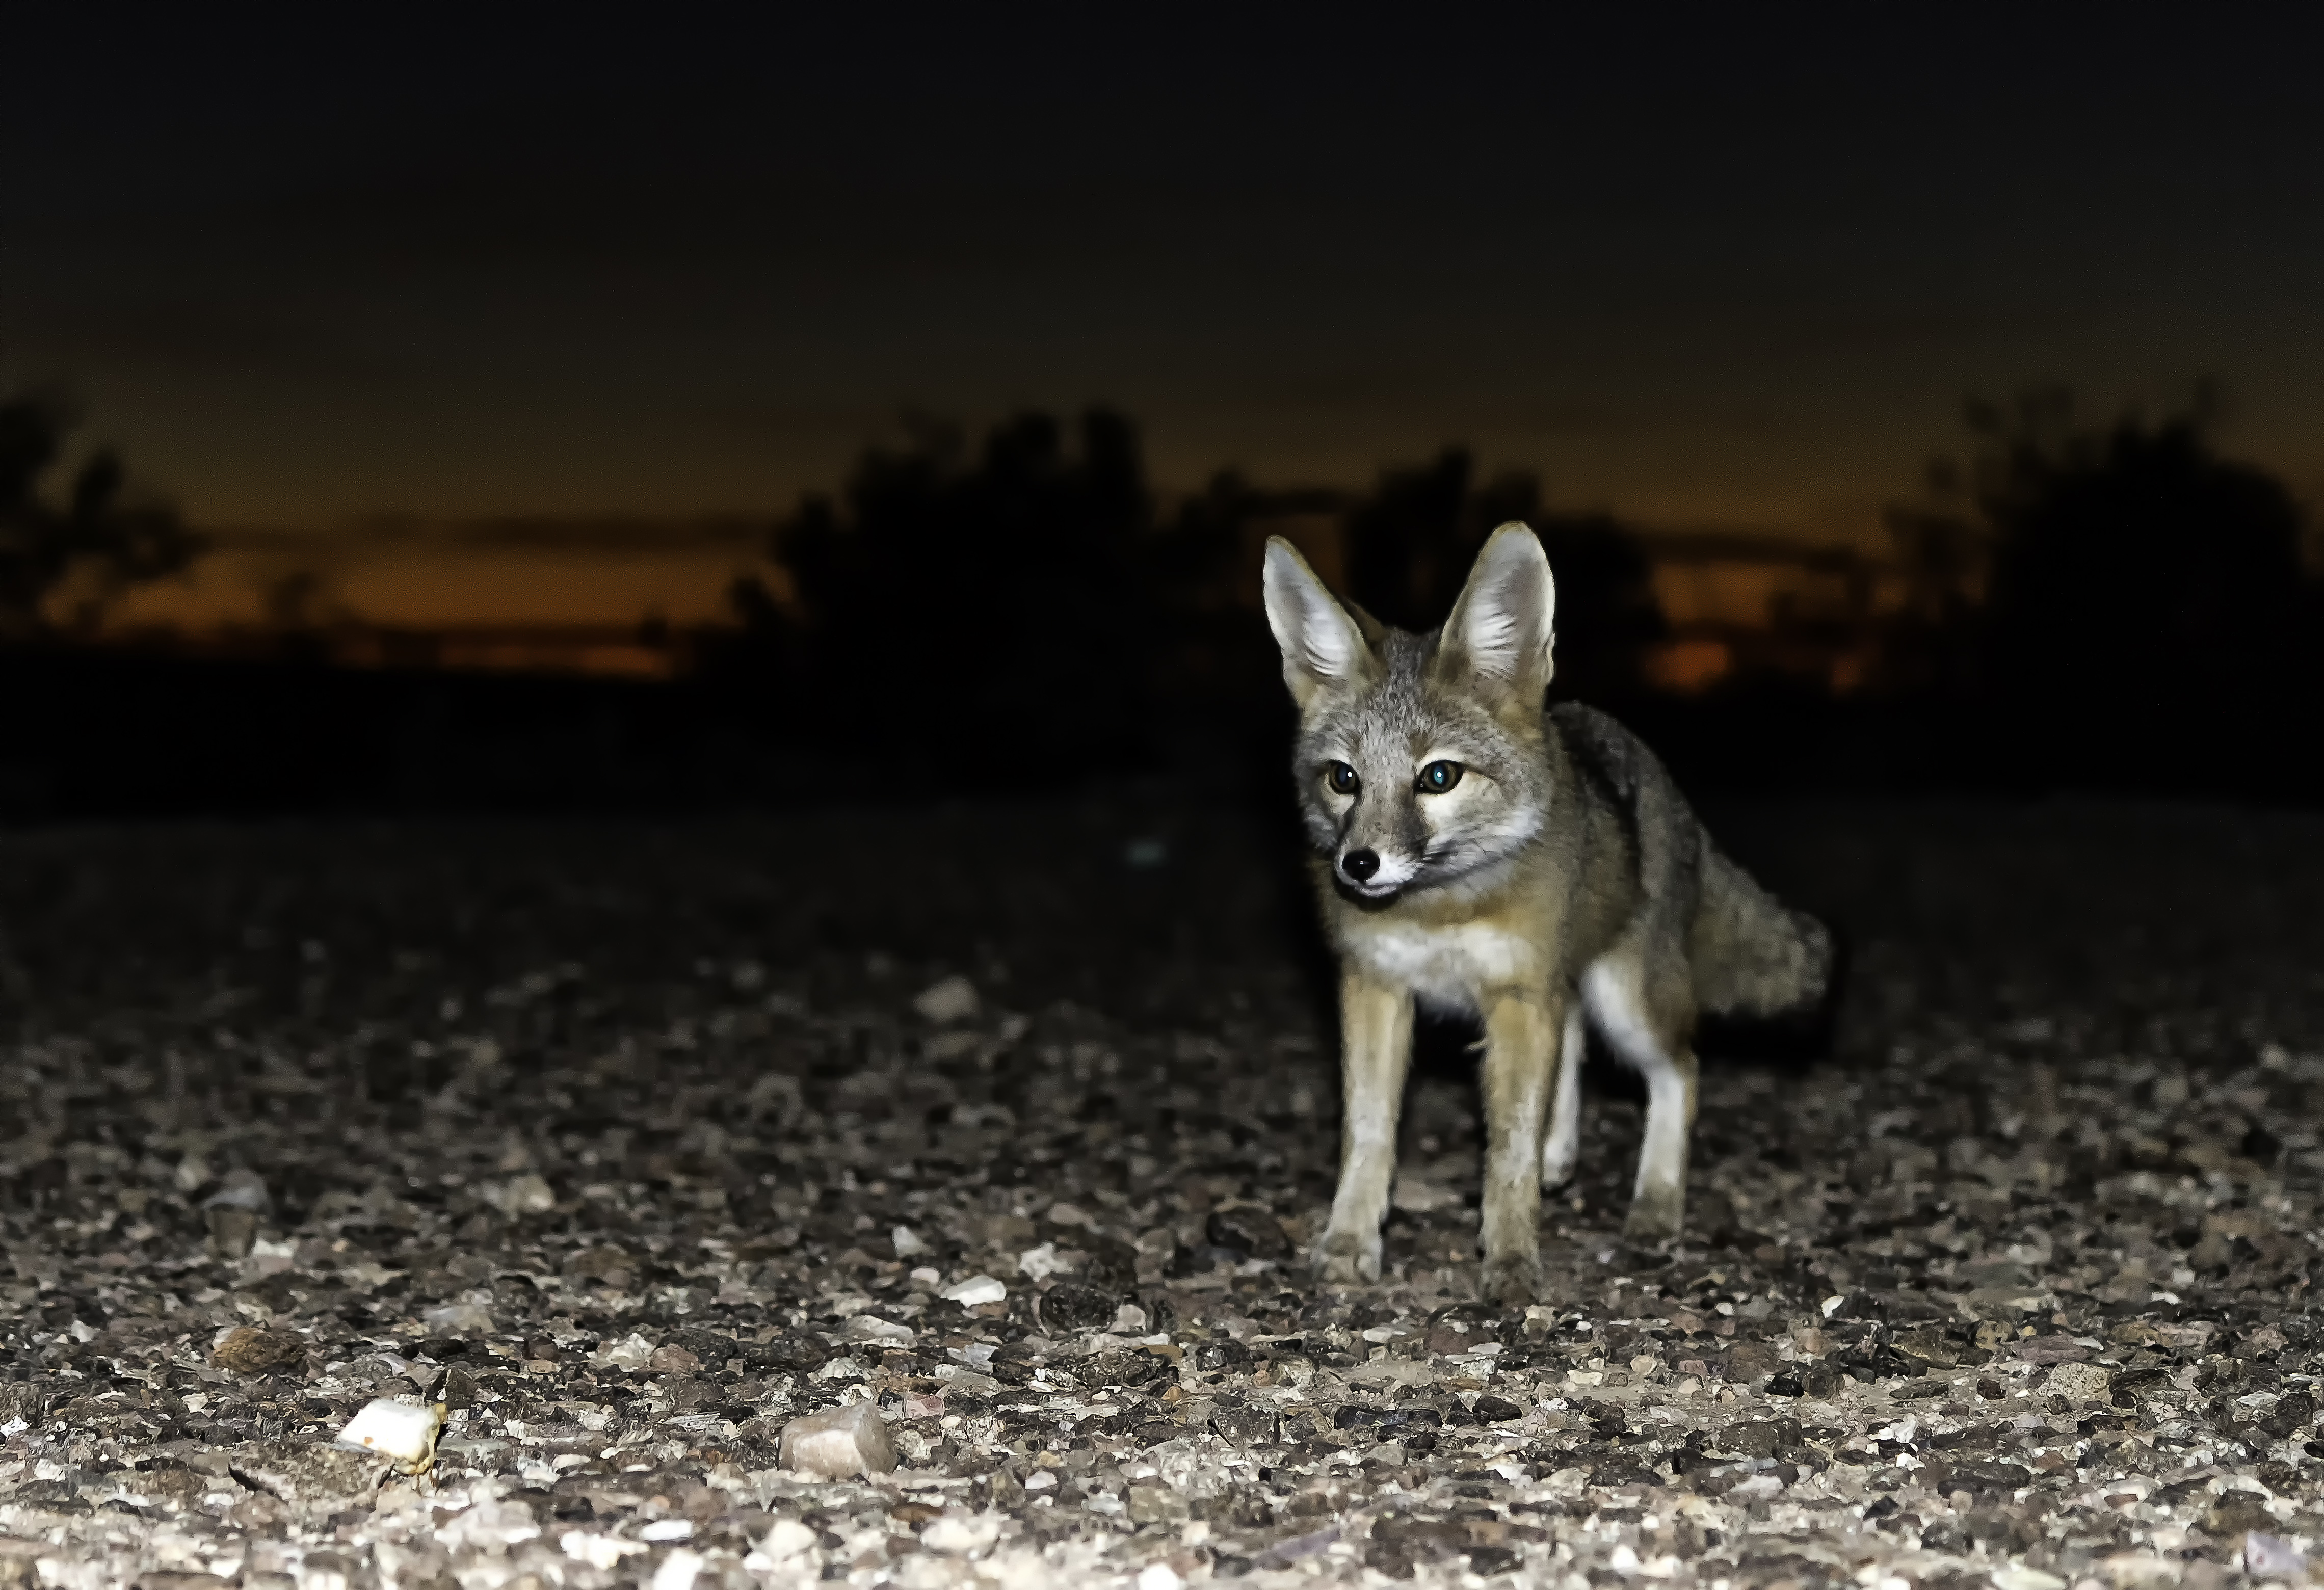 Photo by Bruce C Turnbull  |  Kit Fox on Patrol at Sunset